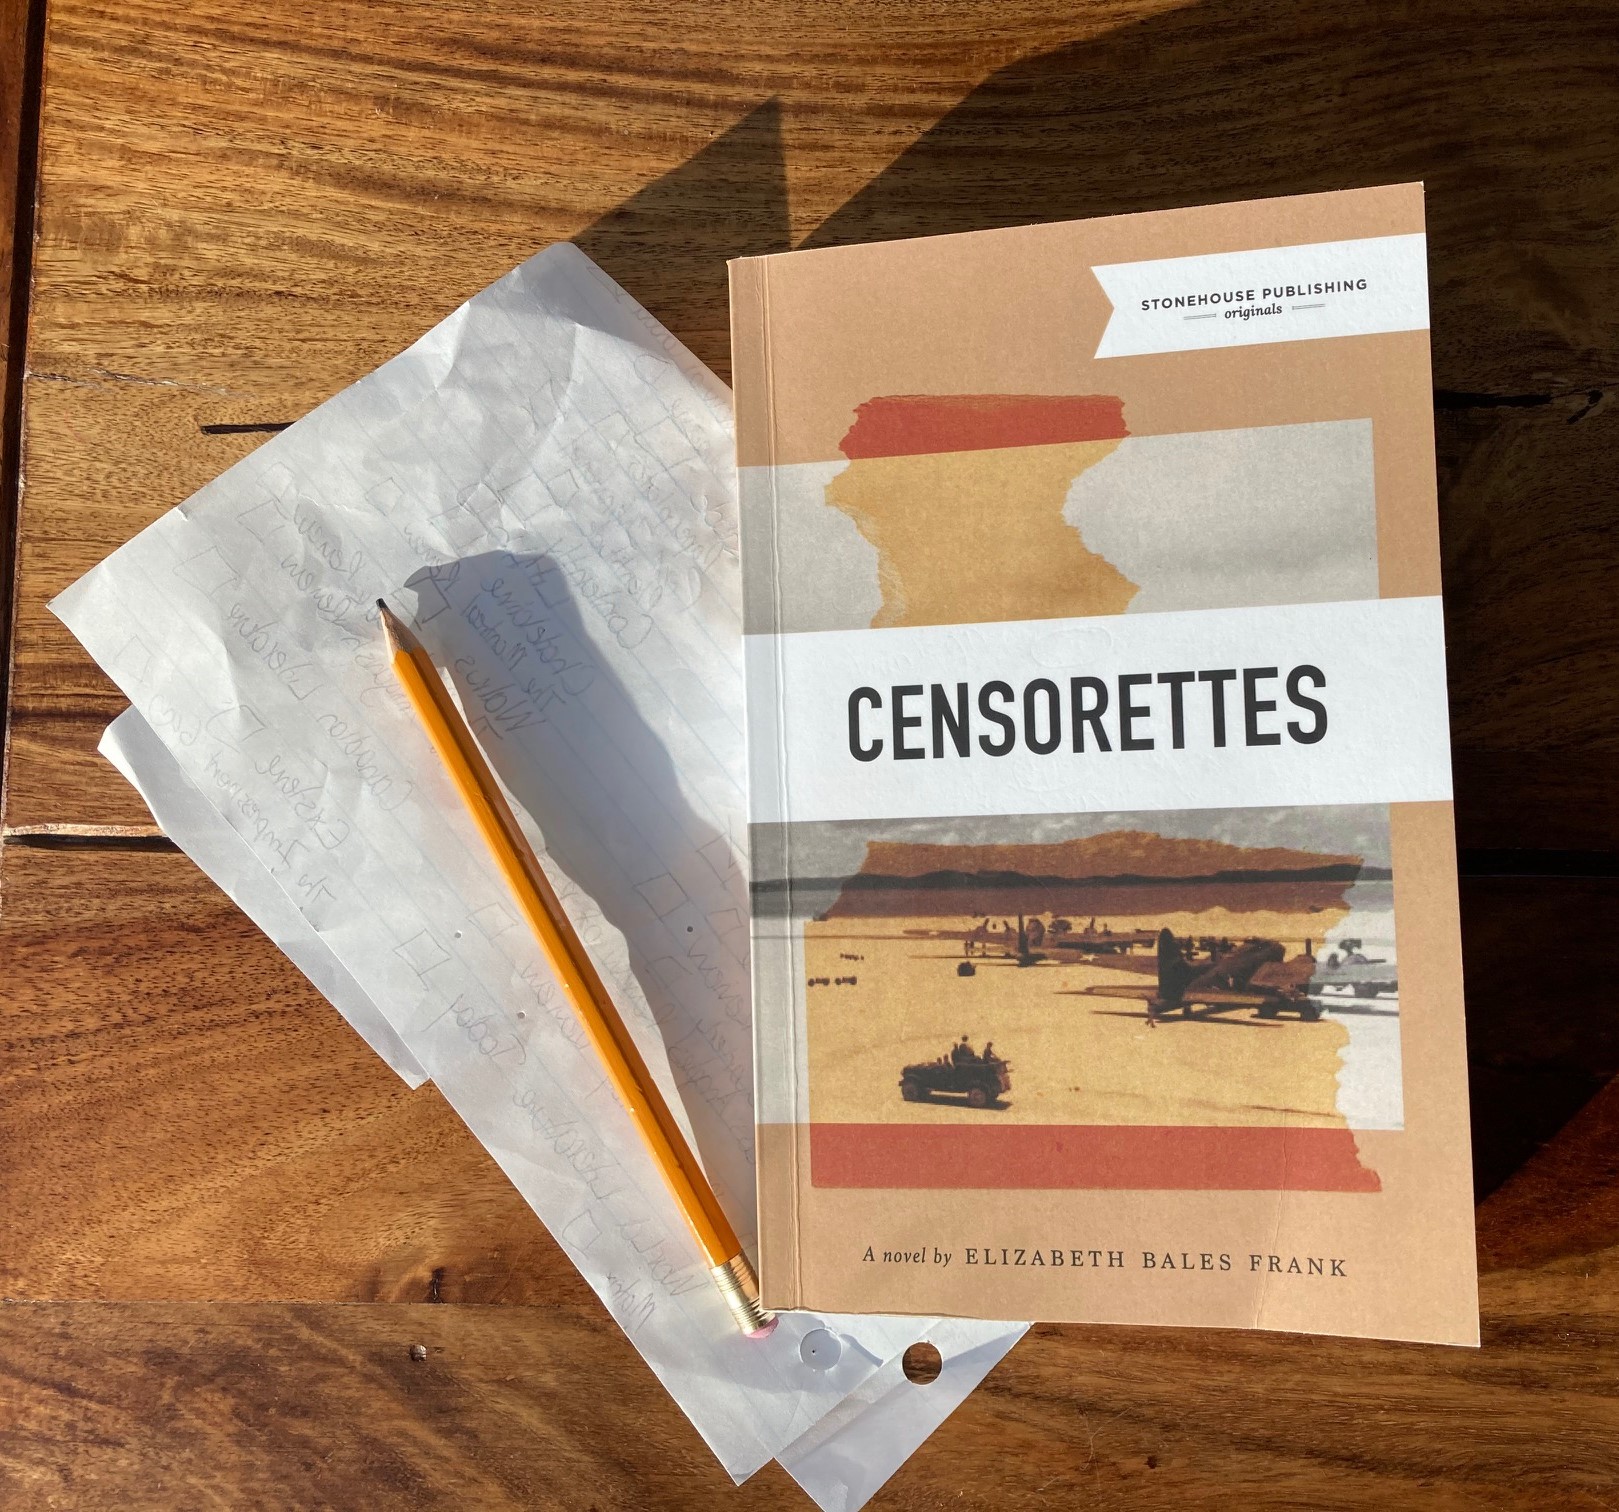 Censorettes by Elizabeth Bales Frank cover image